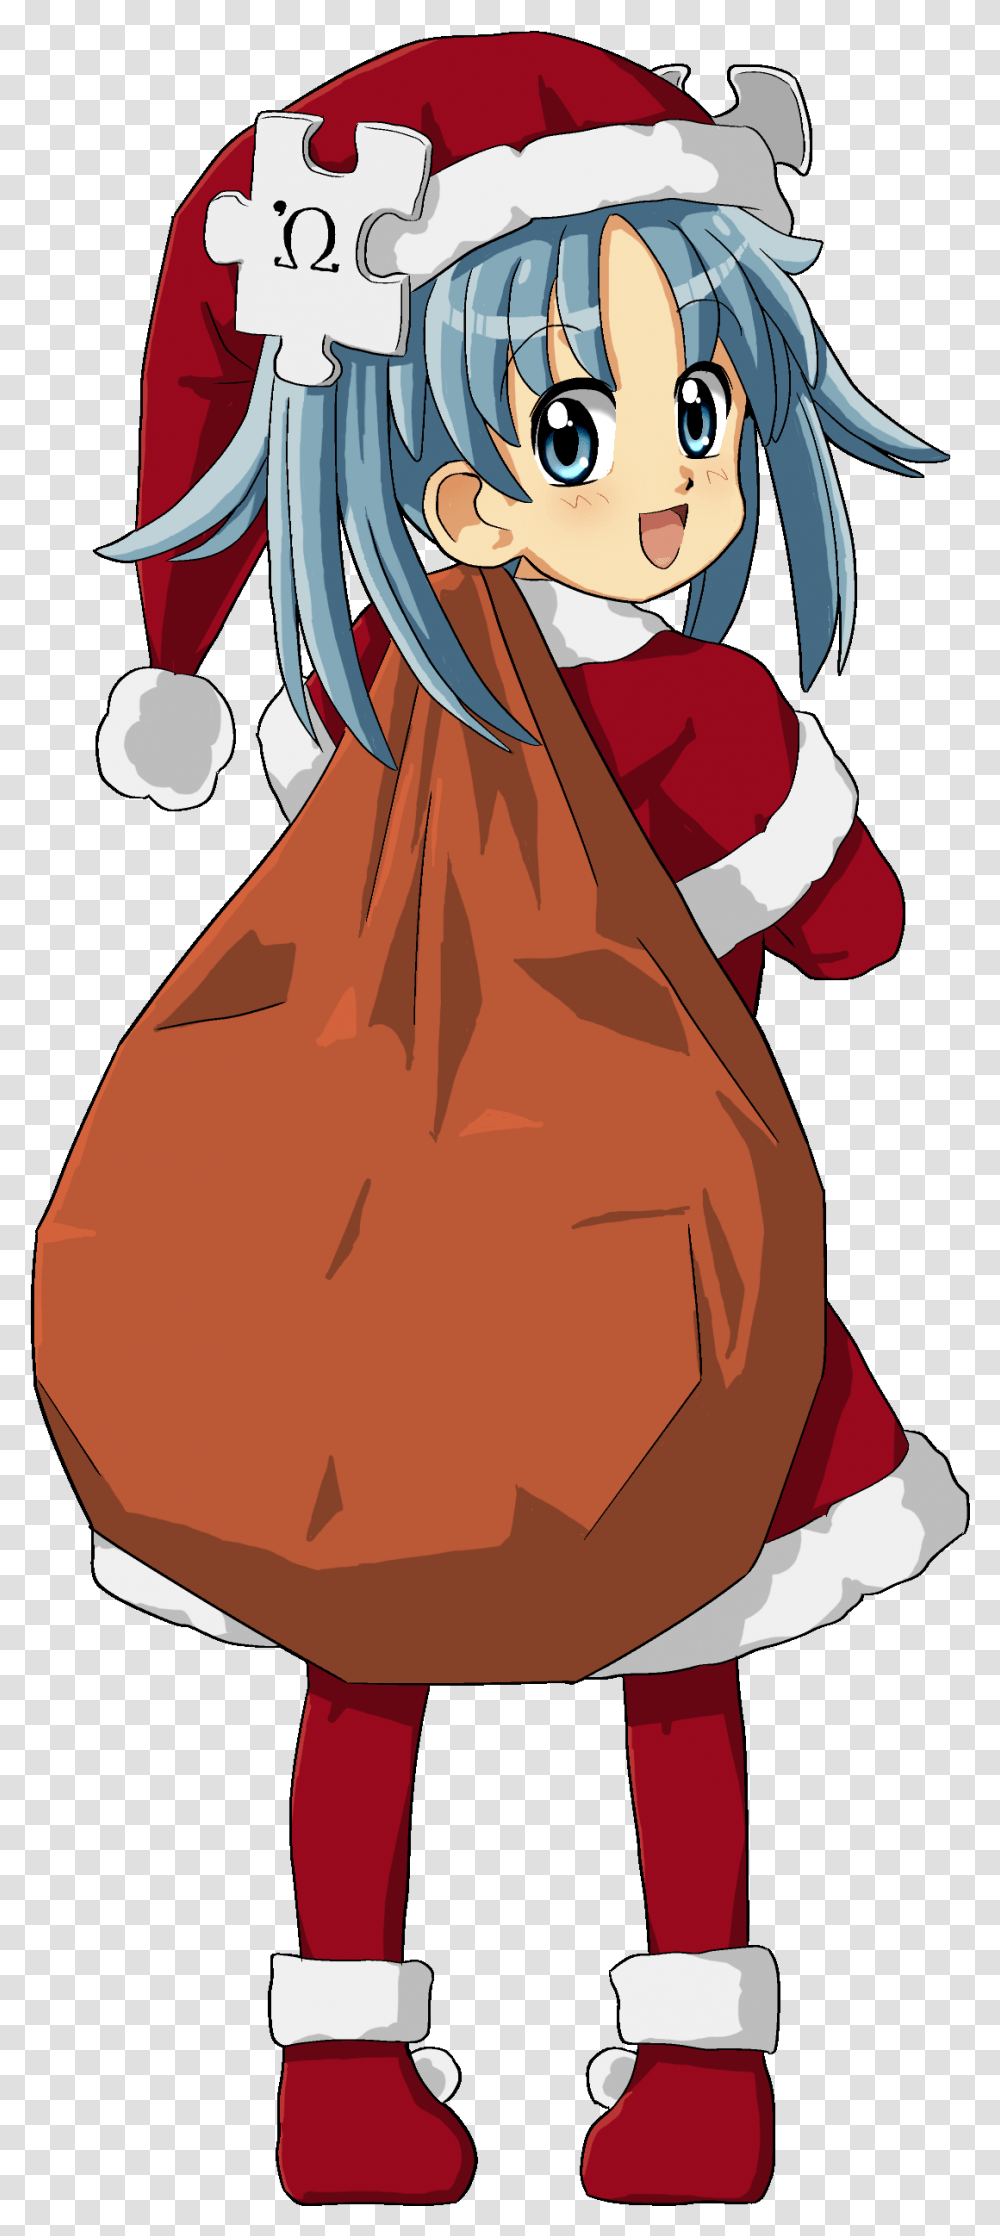 Wikipe Tan In Santa Costume Cartoon, Bag, Shopping Bag, Sack, Sweets Transparent Png